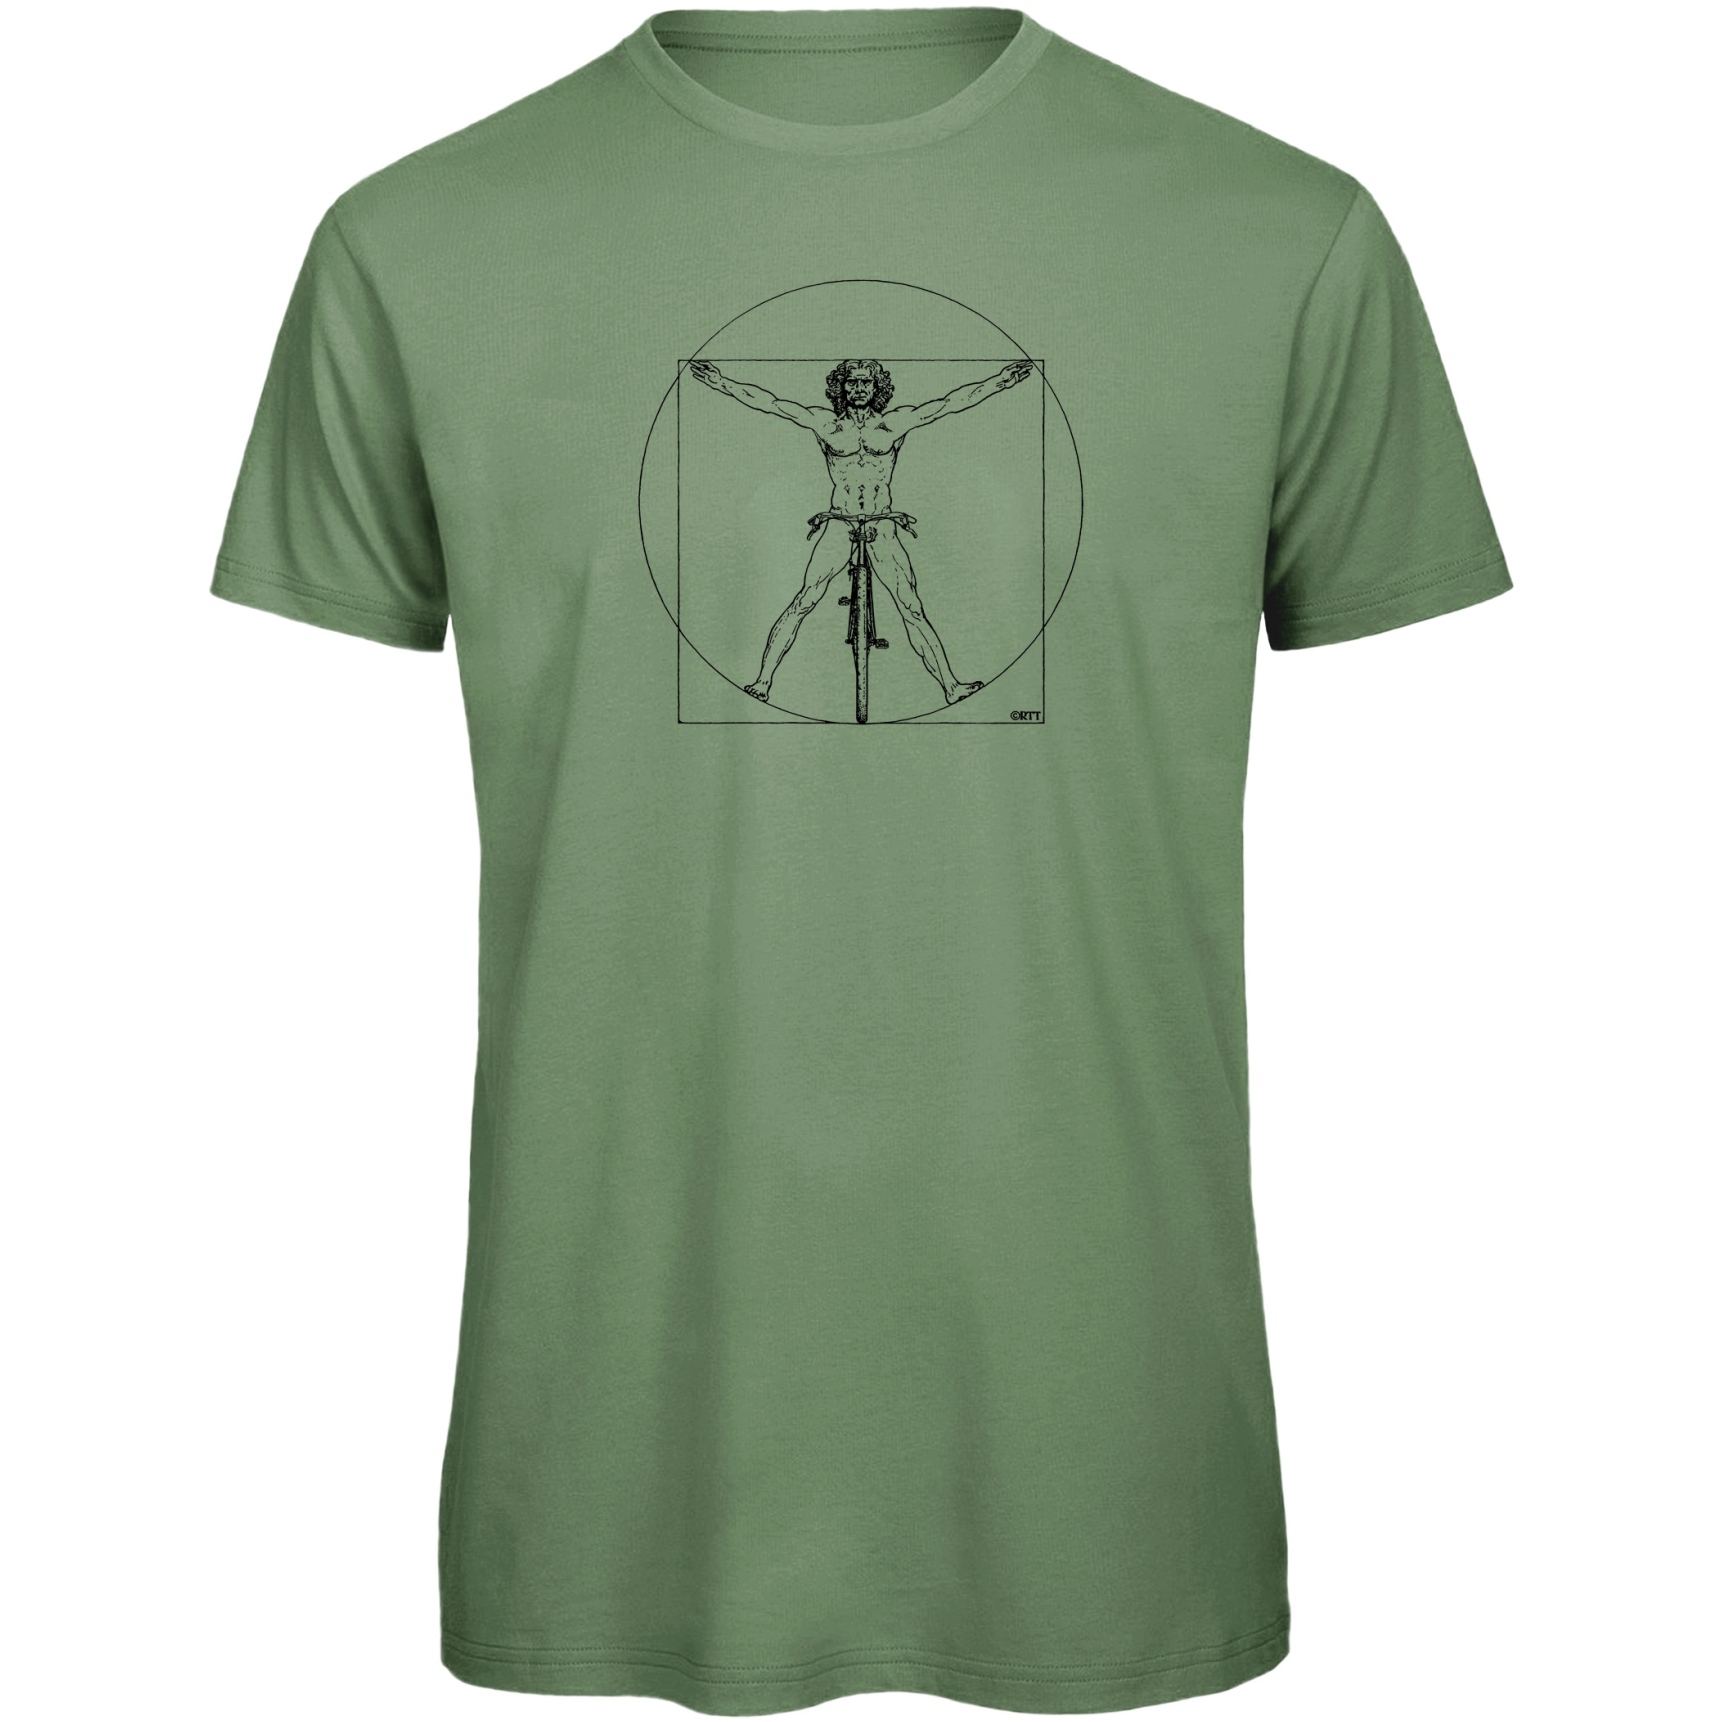 Productfoto van RTTshirts Fiets T-Shirt - DaVinci - lichtgroen